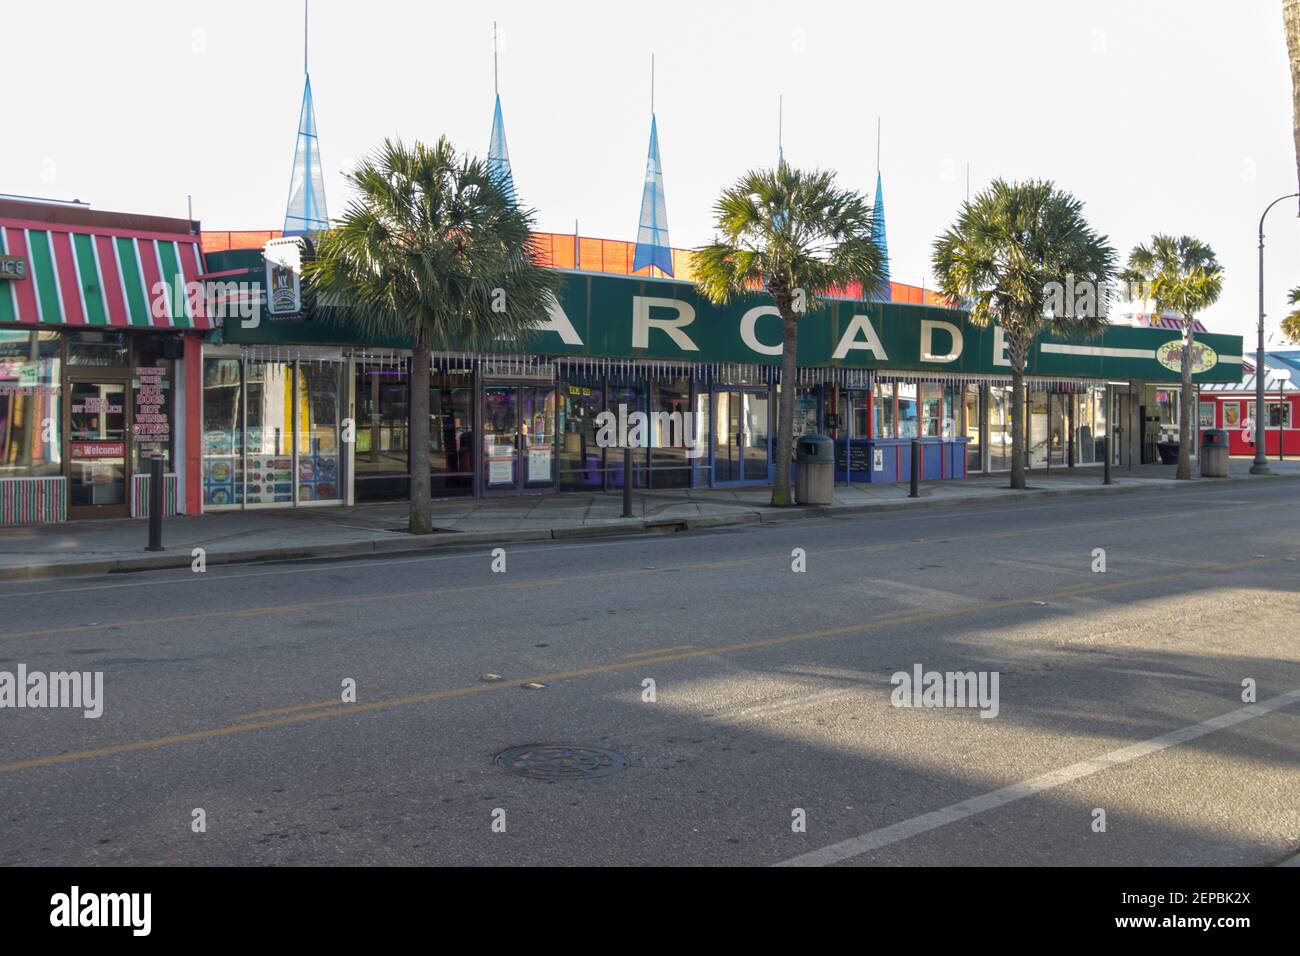 Myrtle Beach, South Carolina, USA - 25 febbraio 2021: Ingresso di una galleria d'epoca situata nel quartiere del centro di Myrtle Beach, South Carolina. Foto Stock